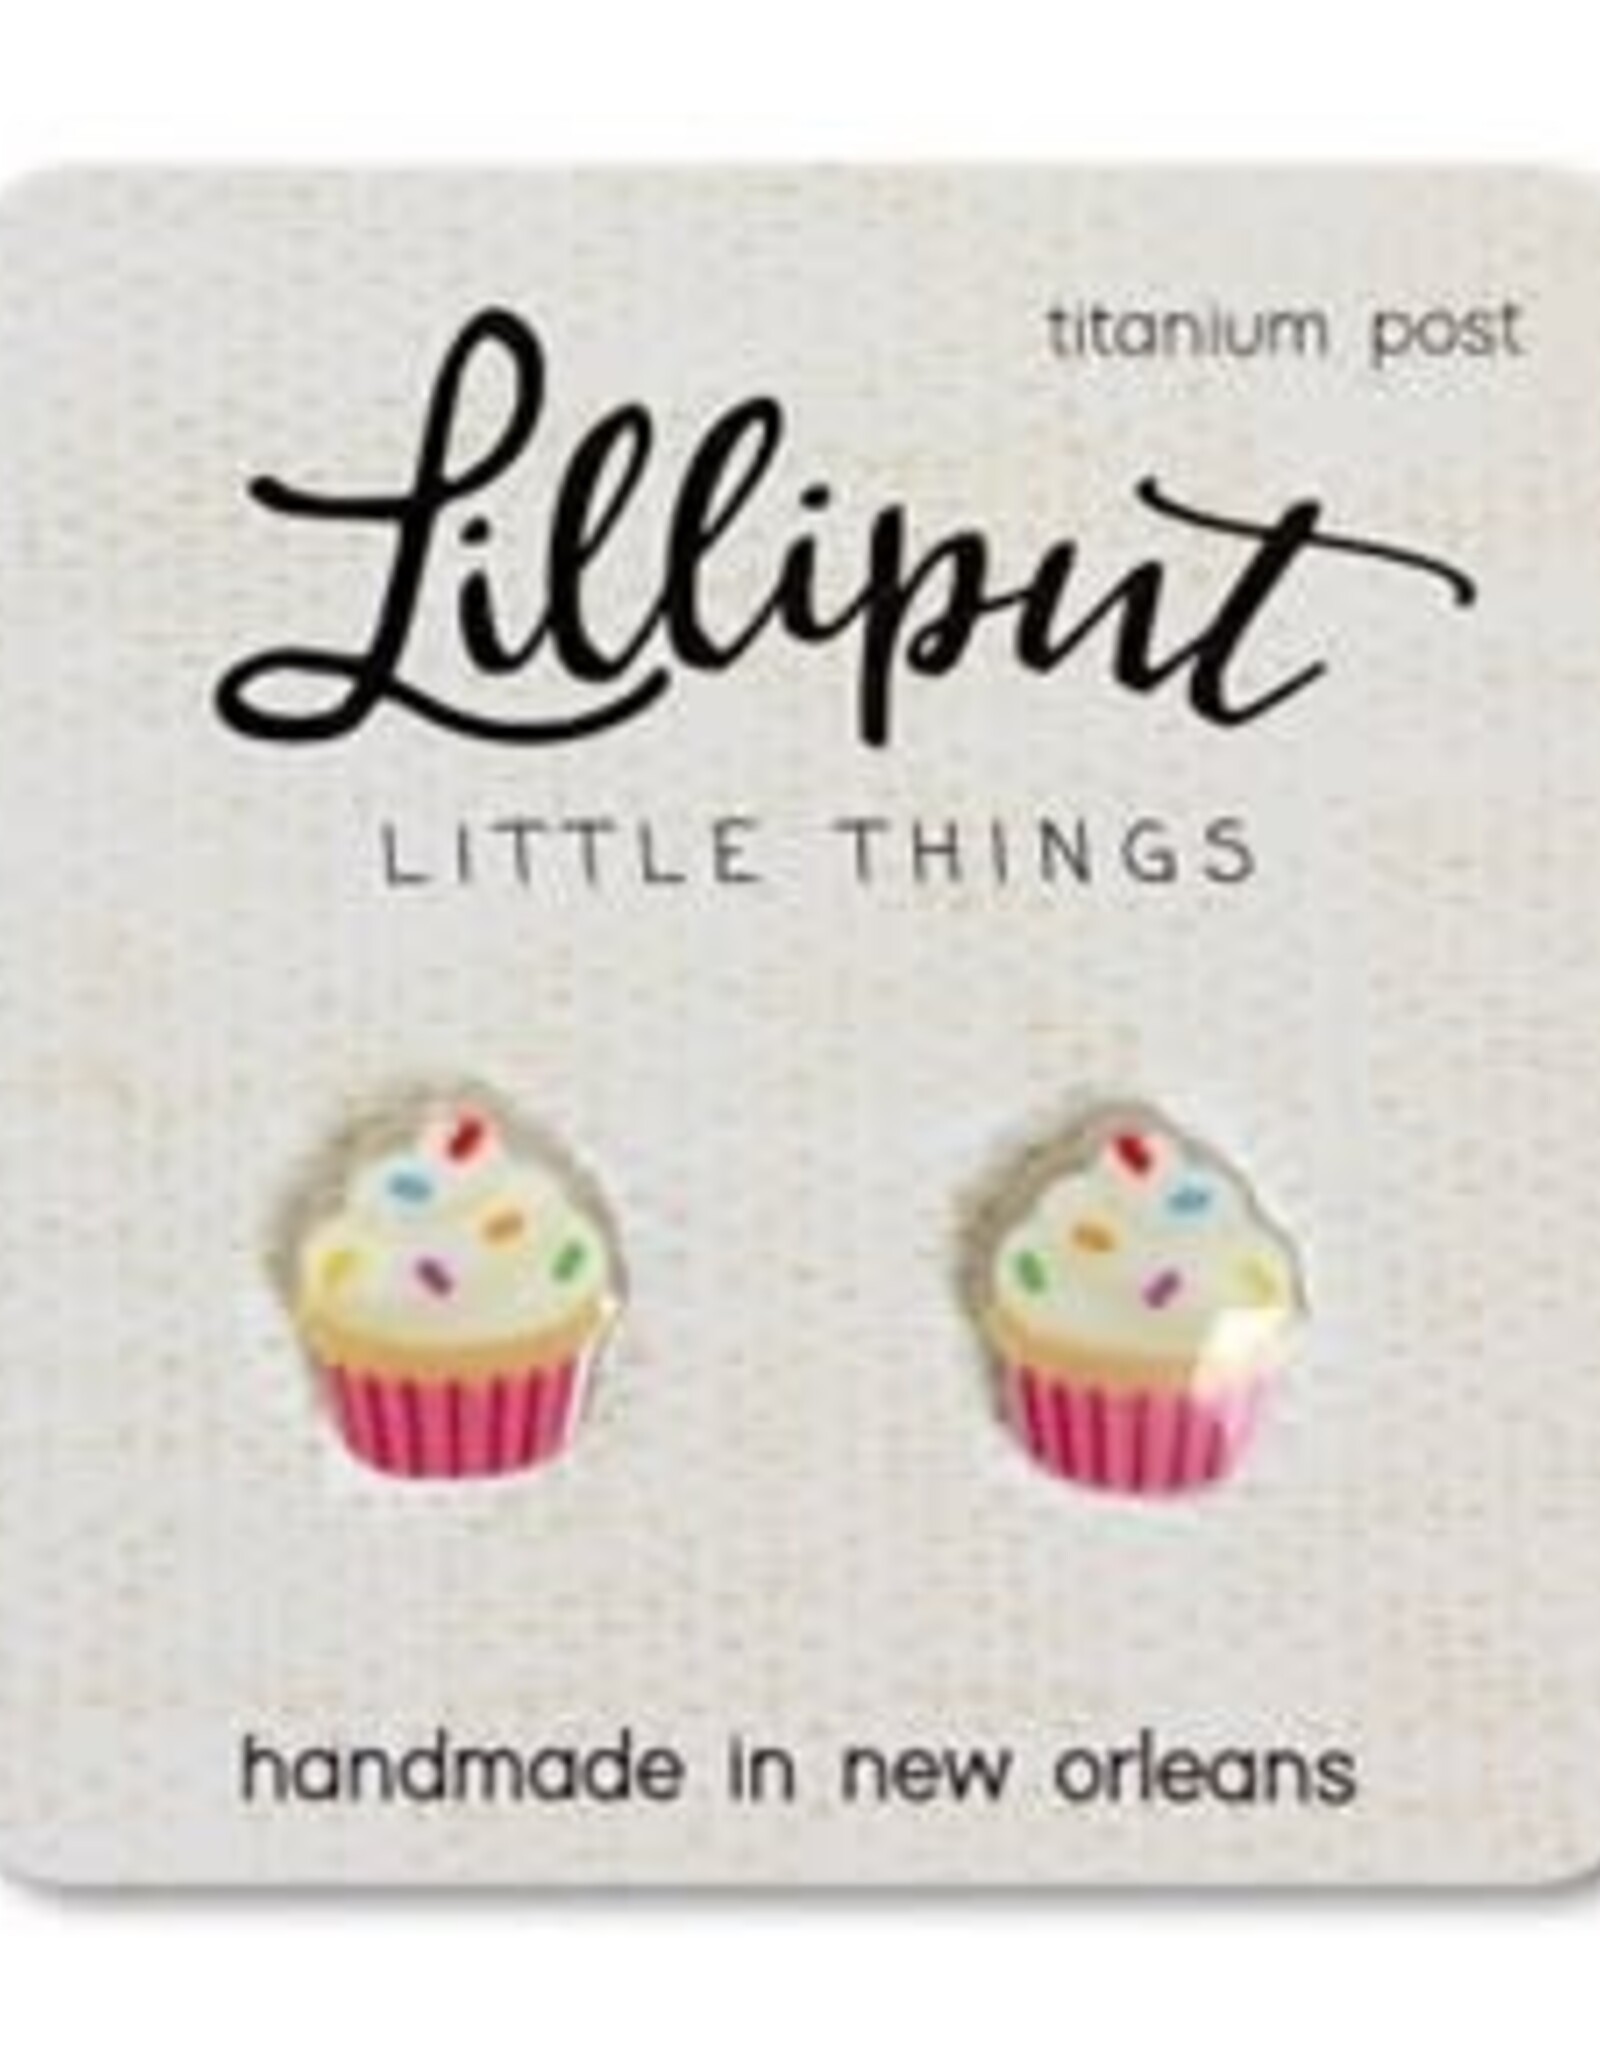 Lilliput Birthday Cupcake Earrings